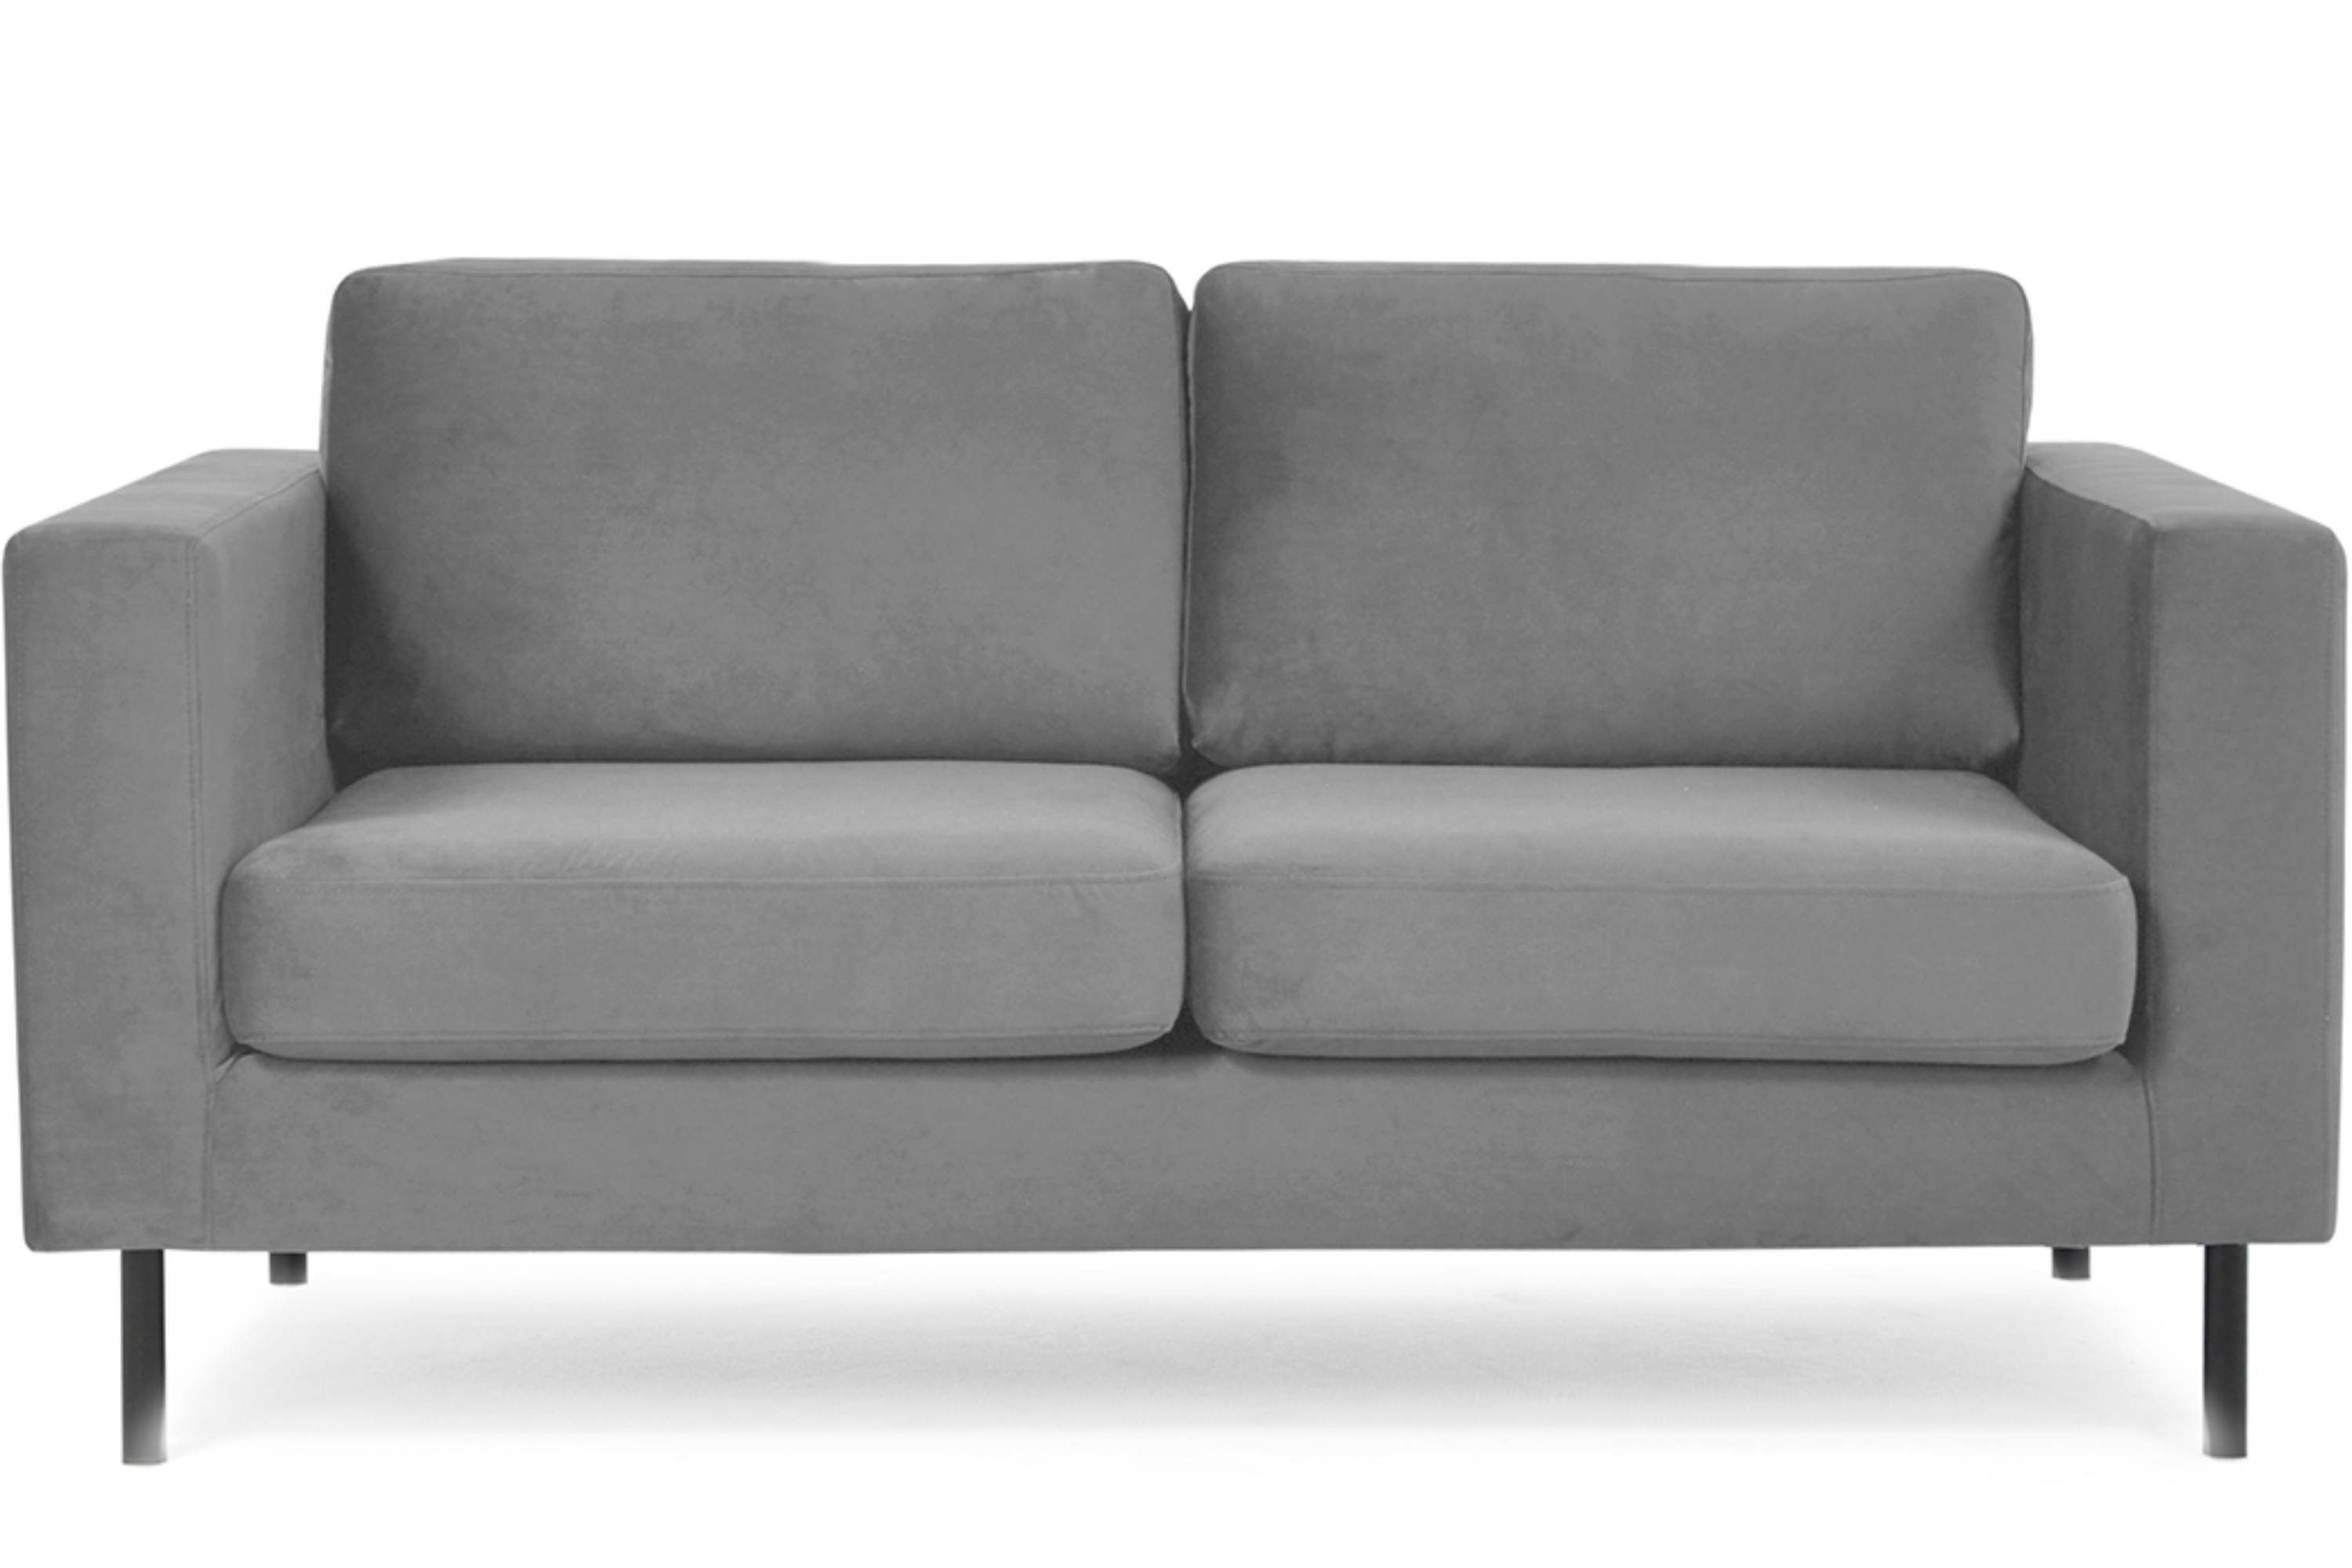 Beine, grau universelles 2 hohe Personen, grau Konsimo Design | TOZZI grau Sofa 2-Sitzer |